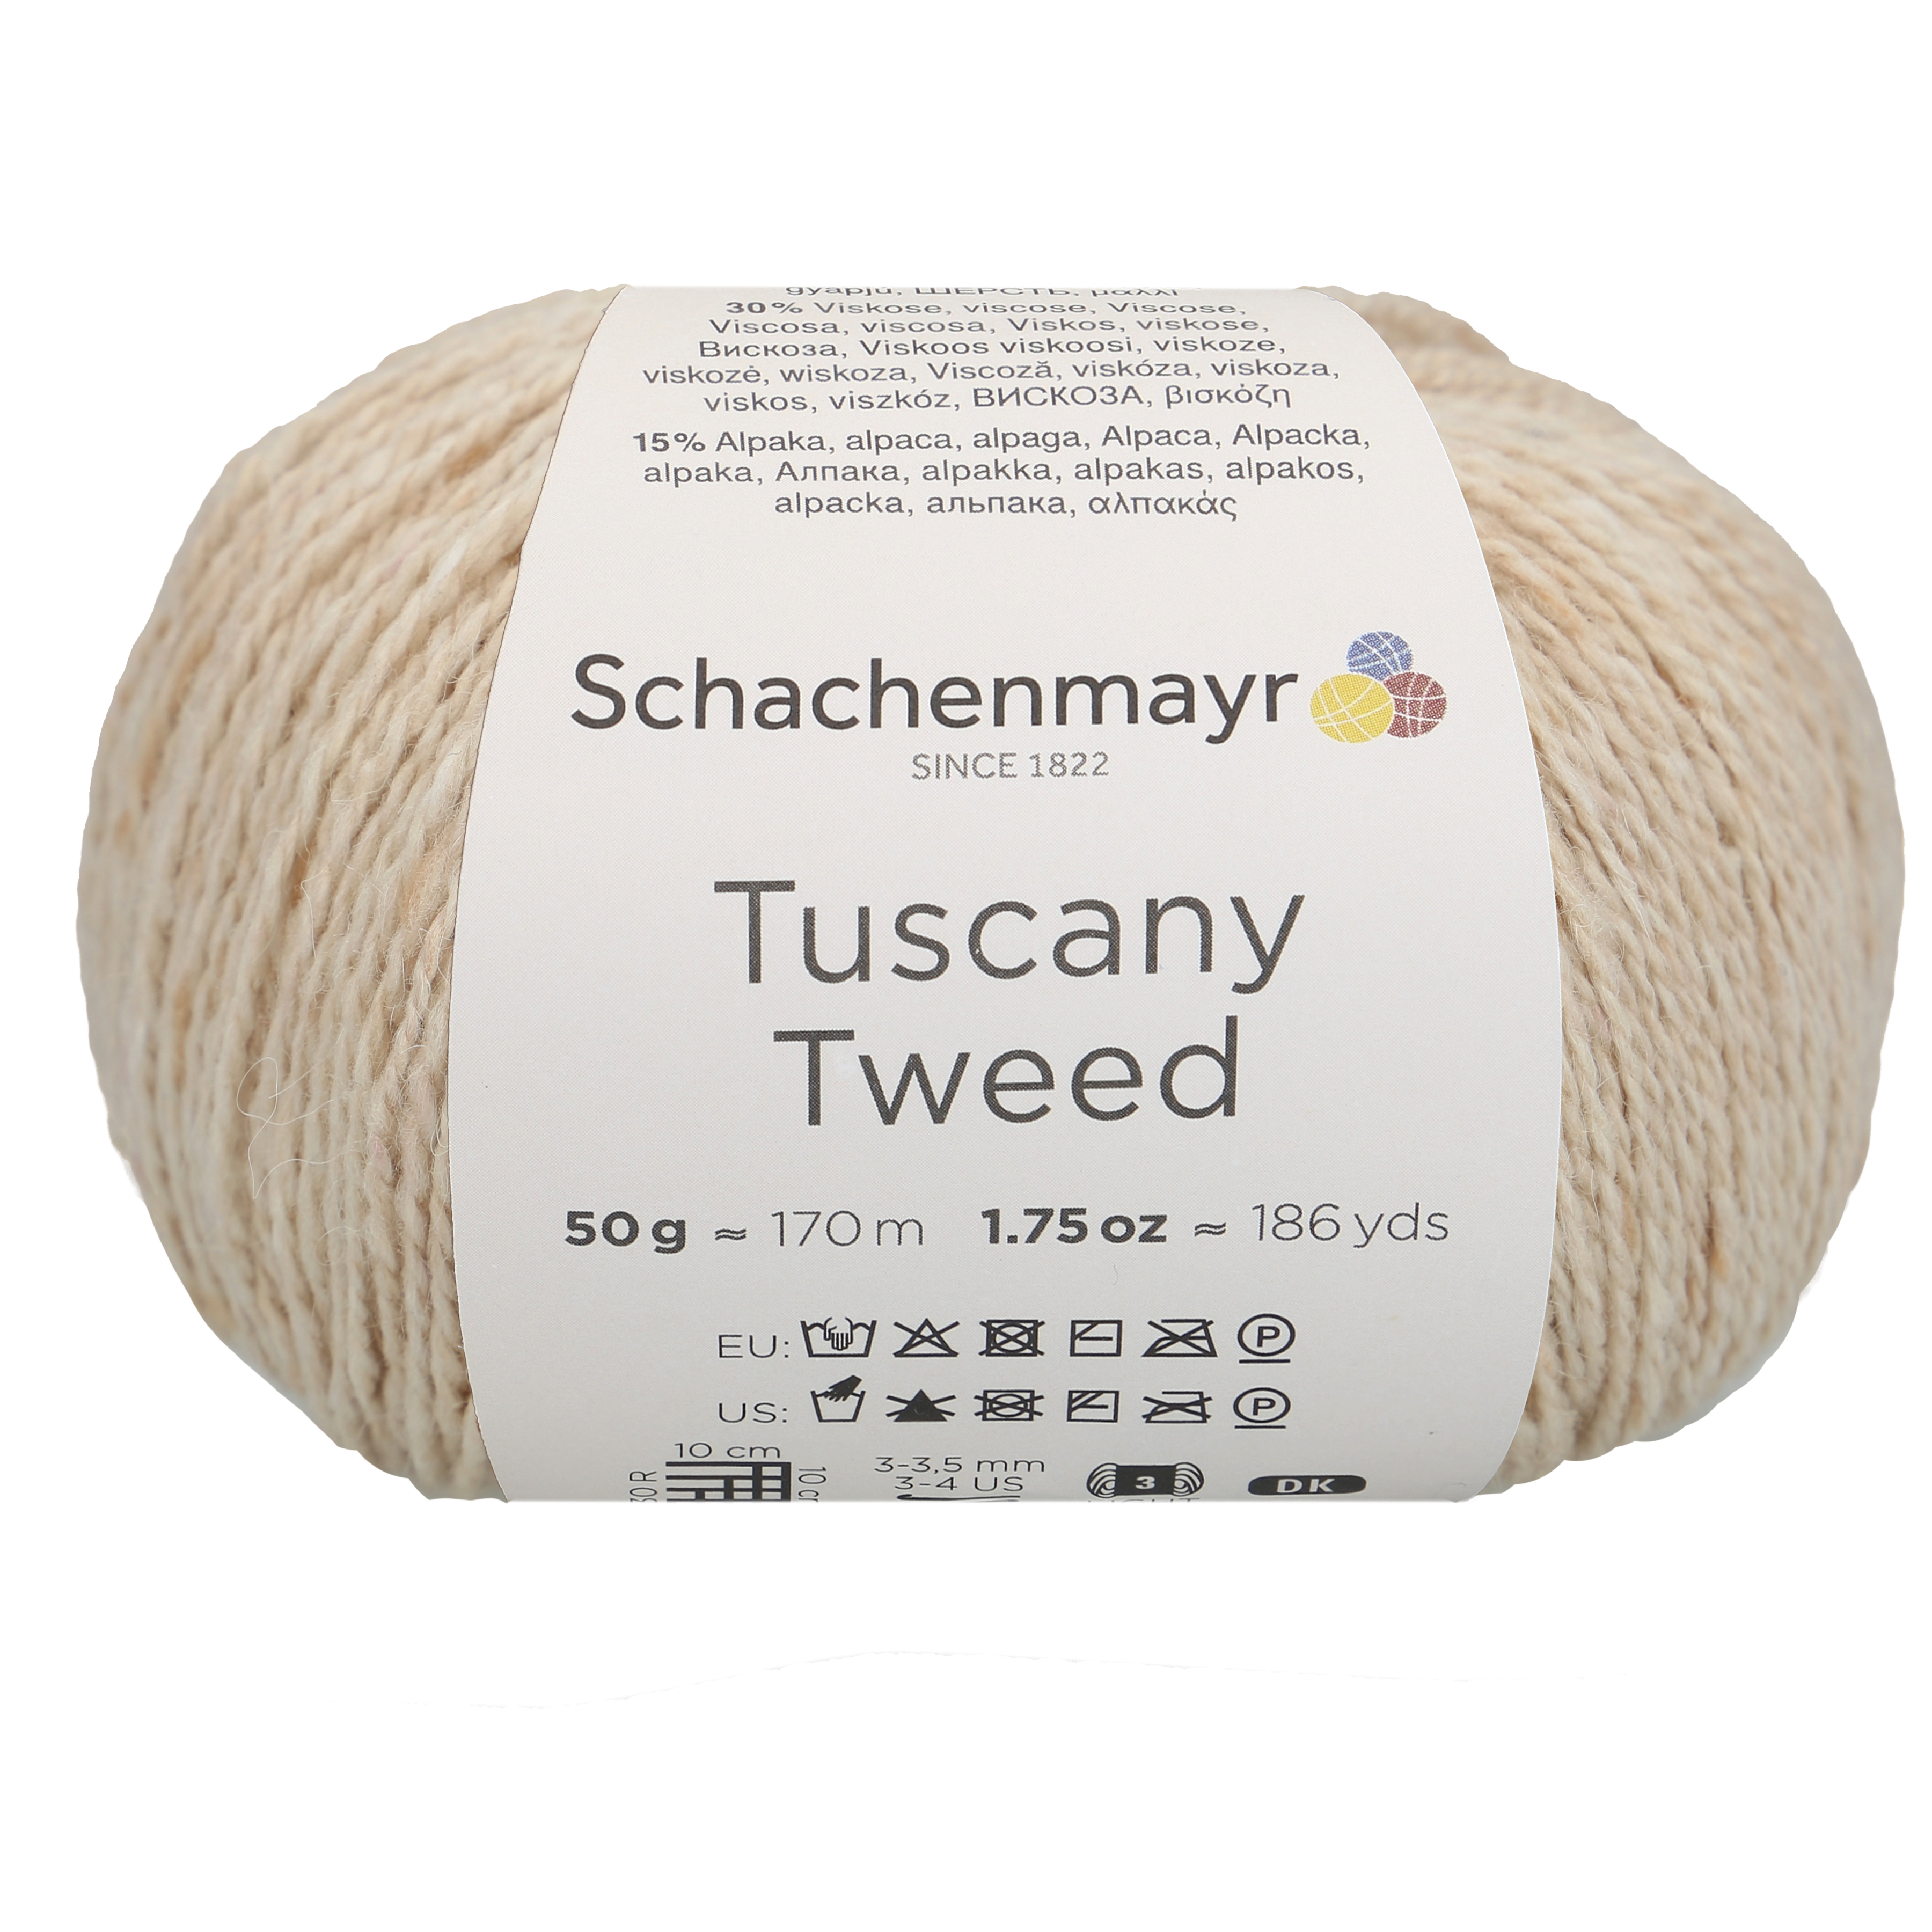 Tuscany Tweed natur 00002